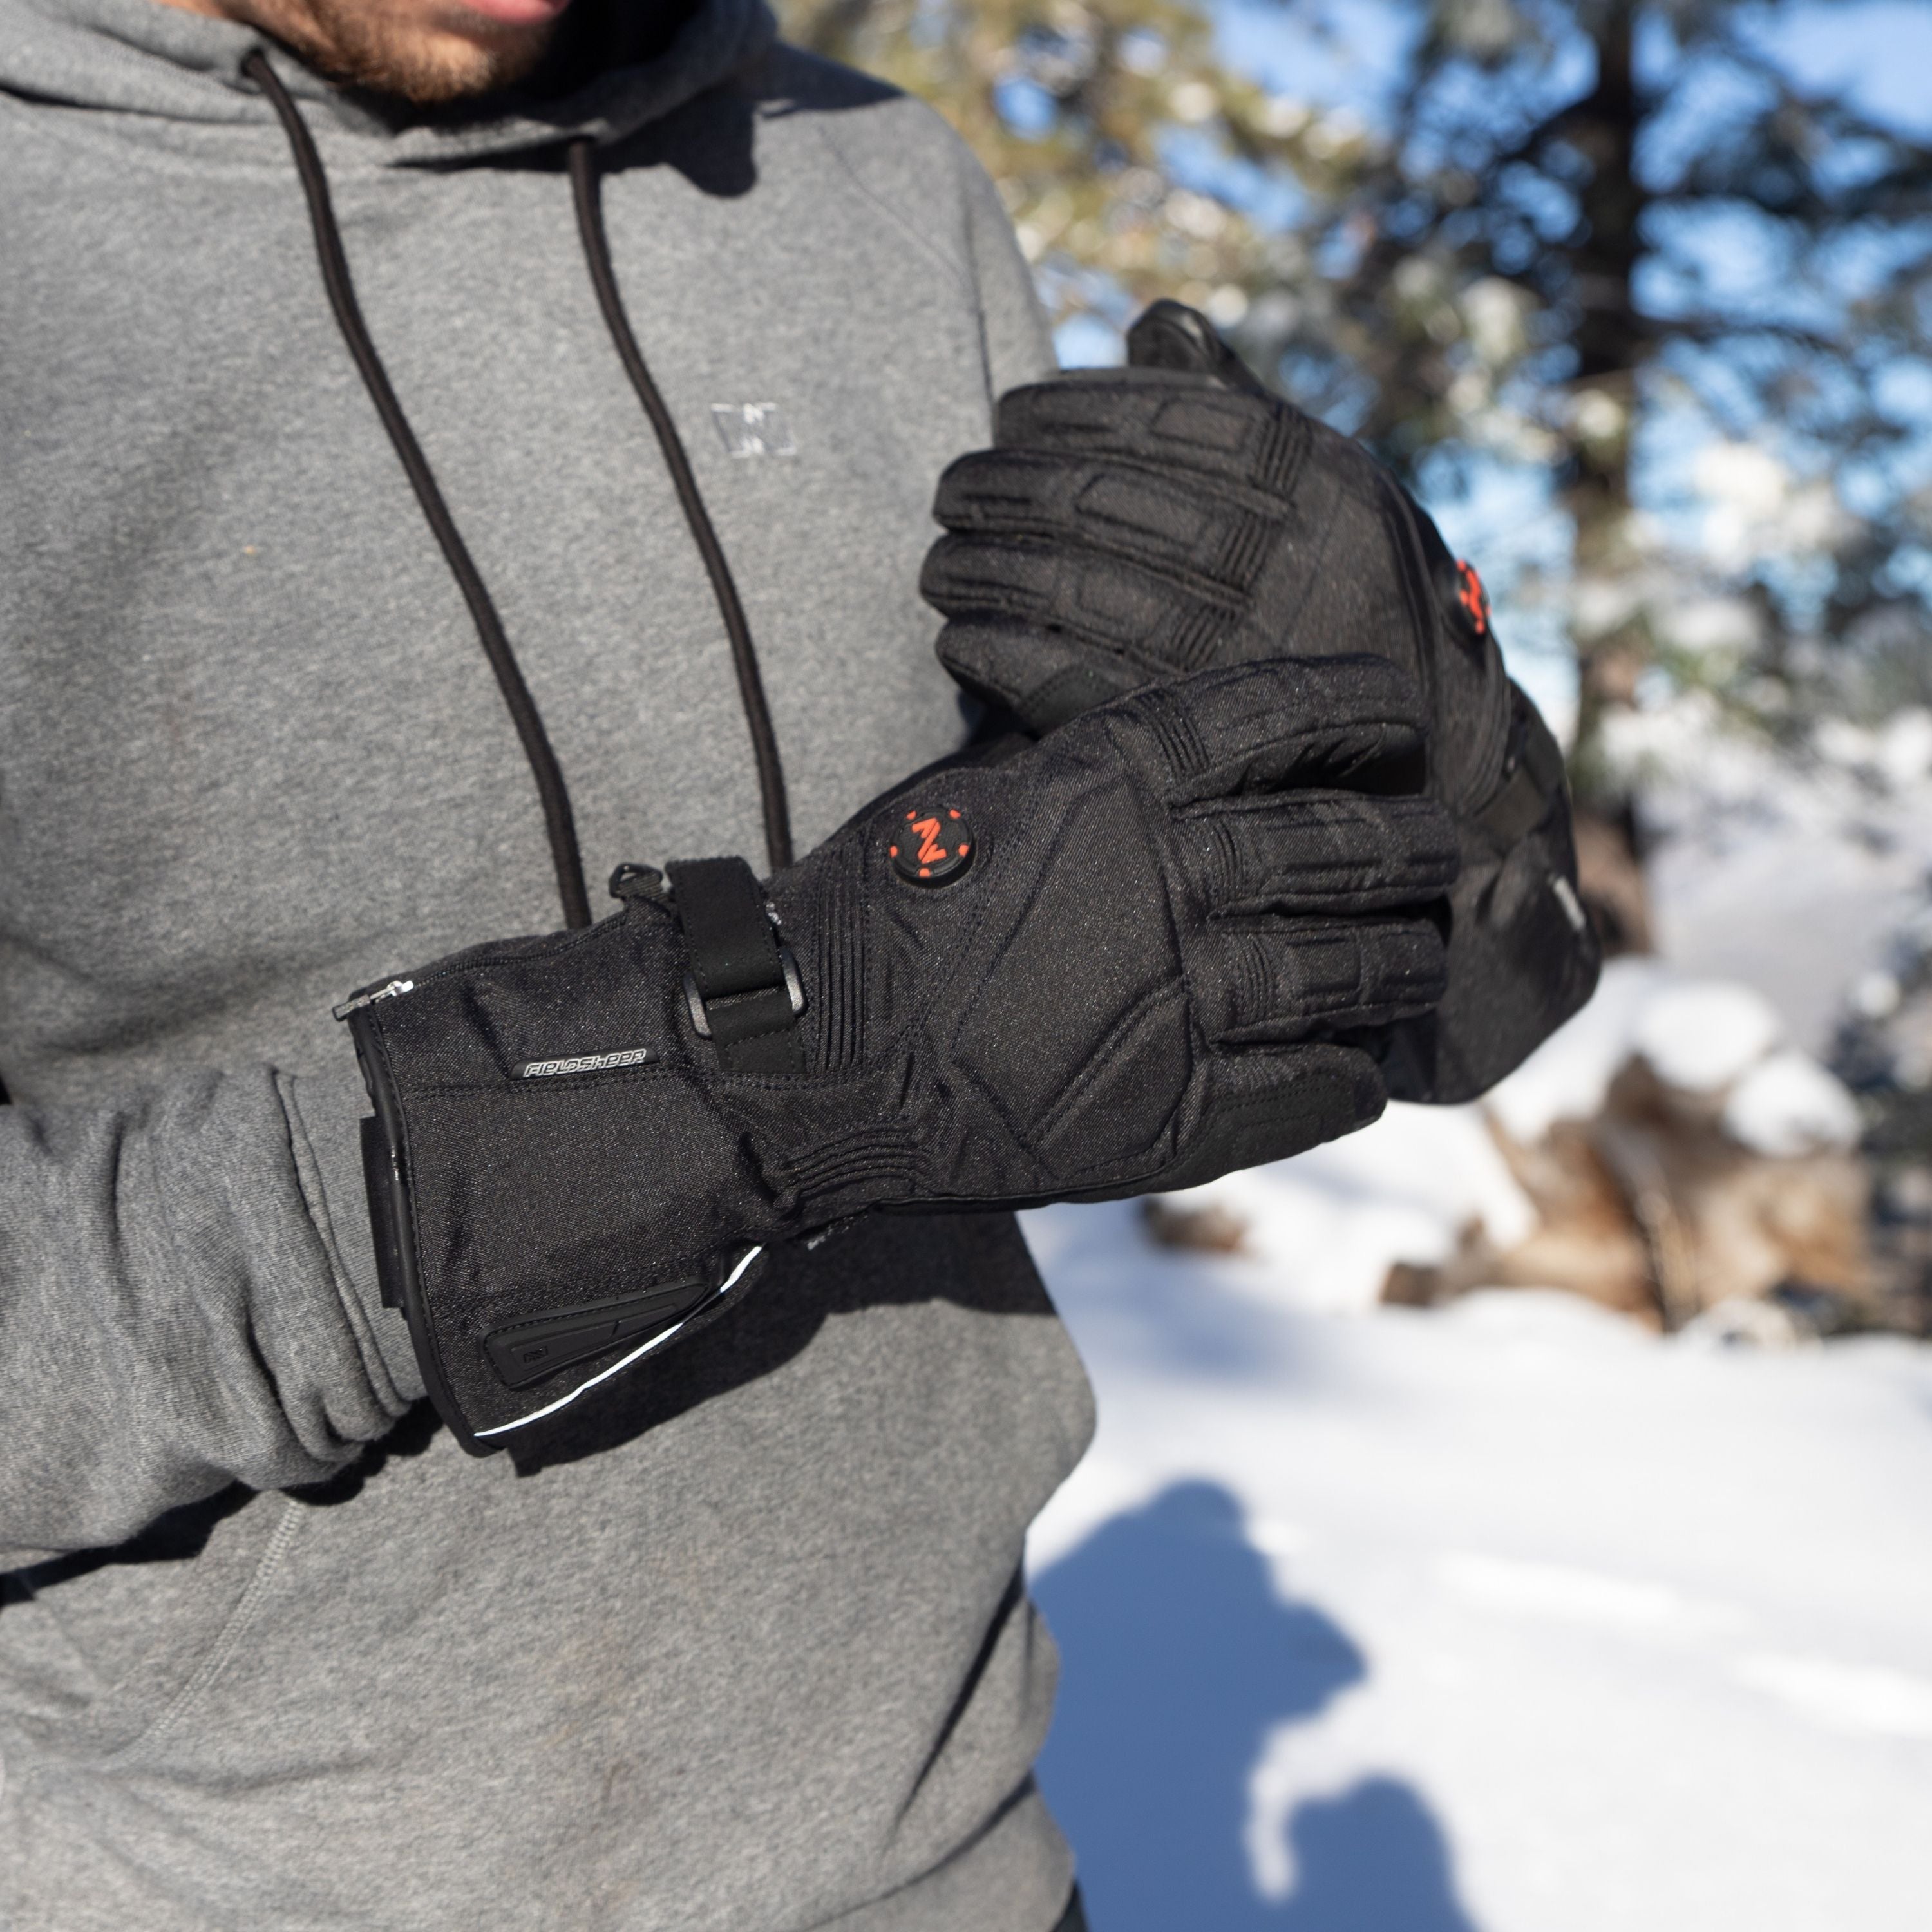 Storm heated gloves - Unisex